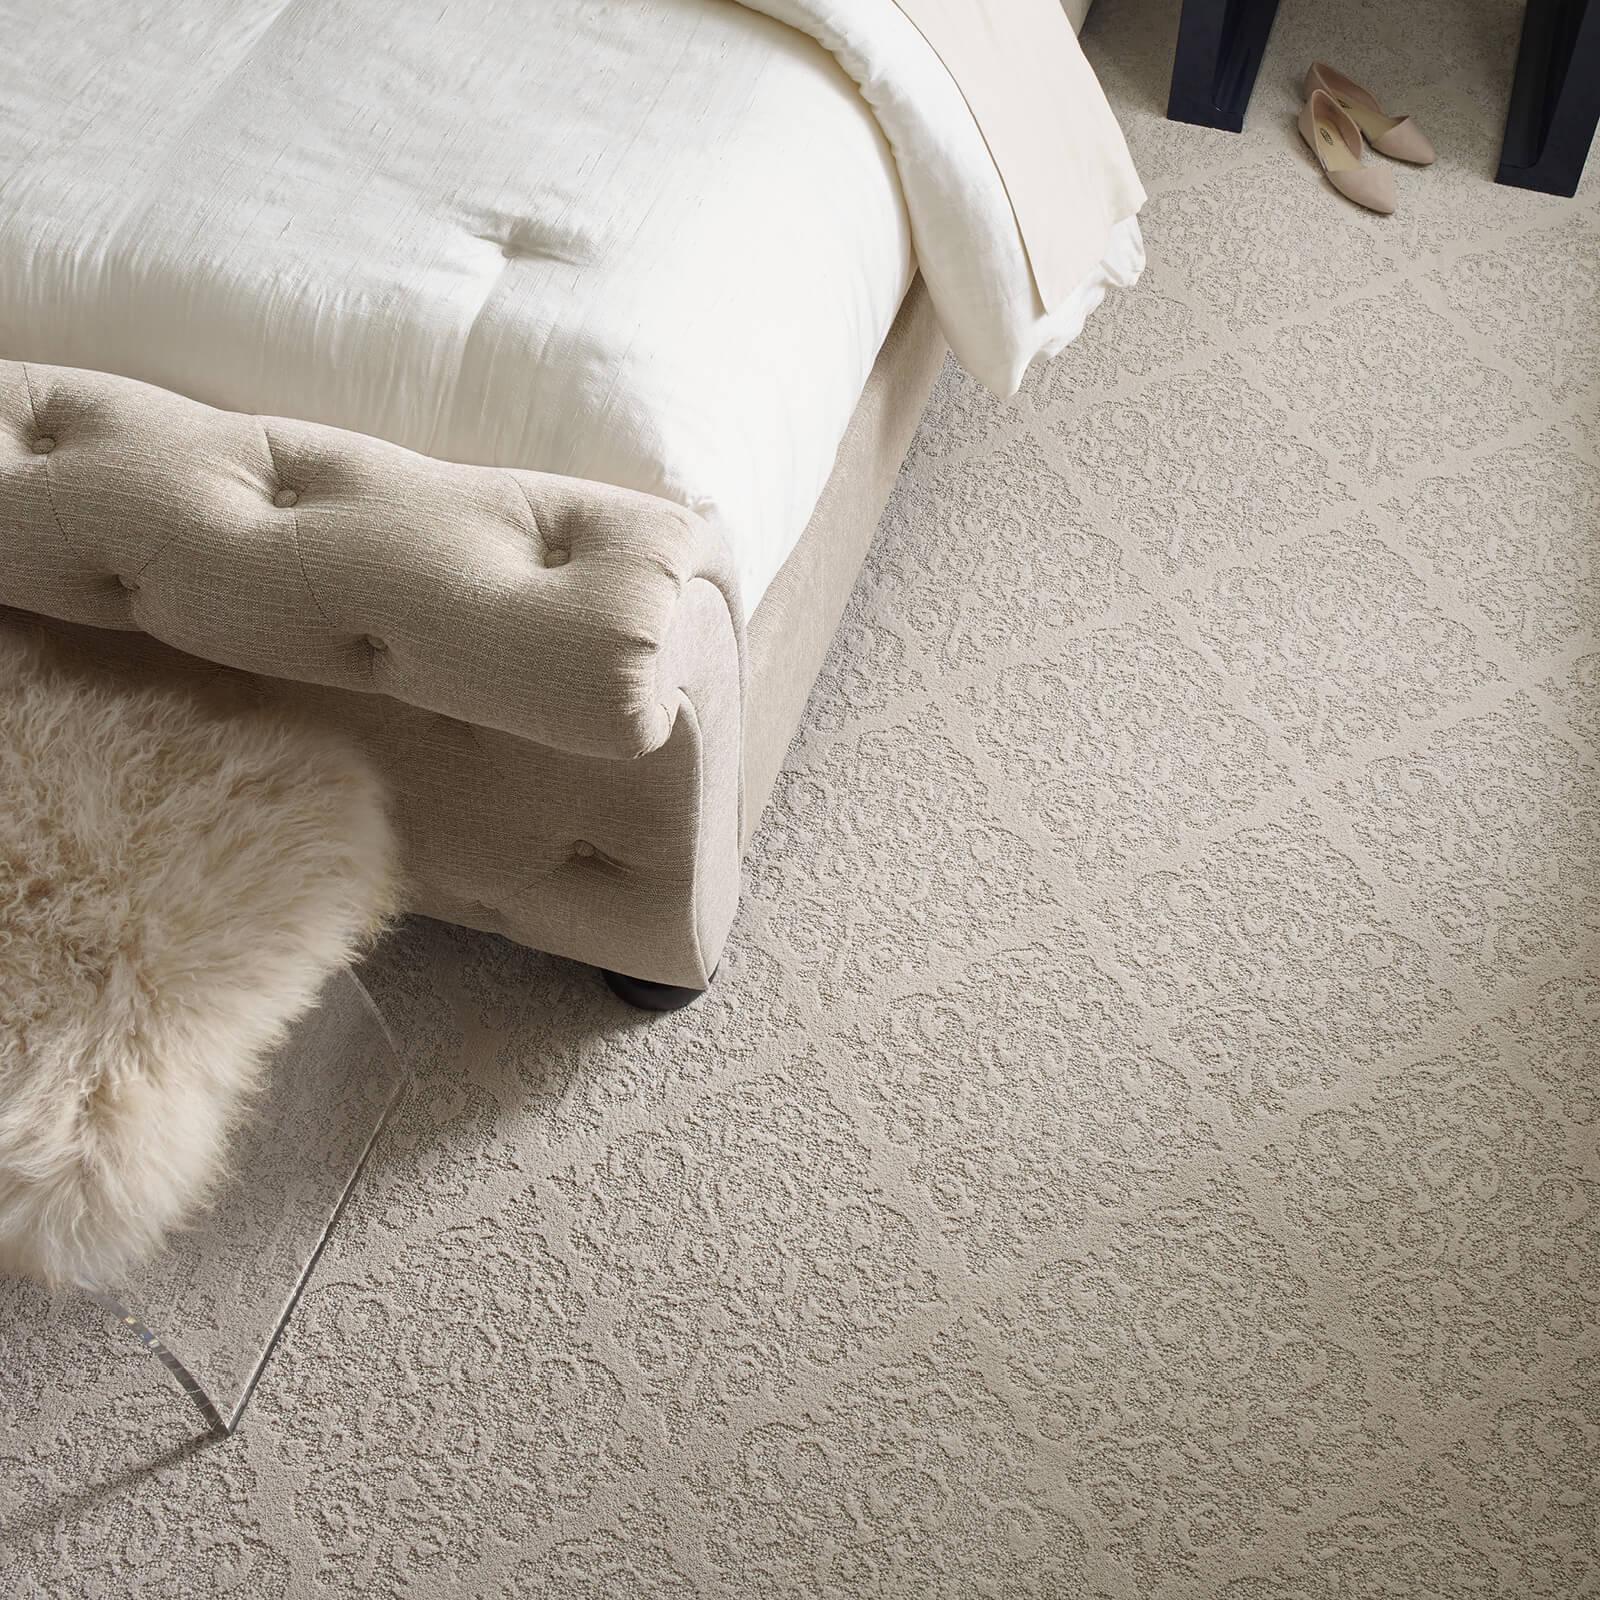 Laminate floors in bedroom | Carpetland USA